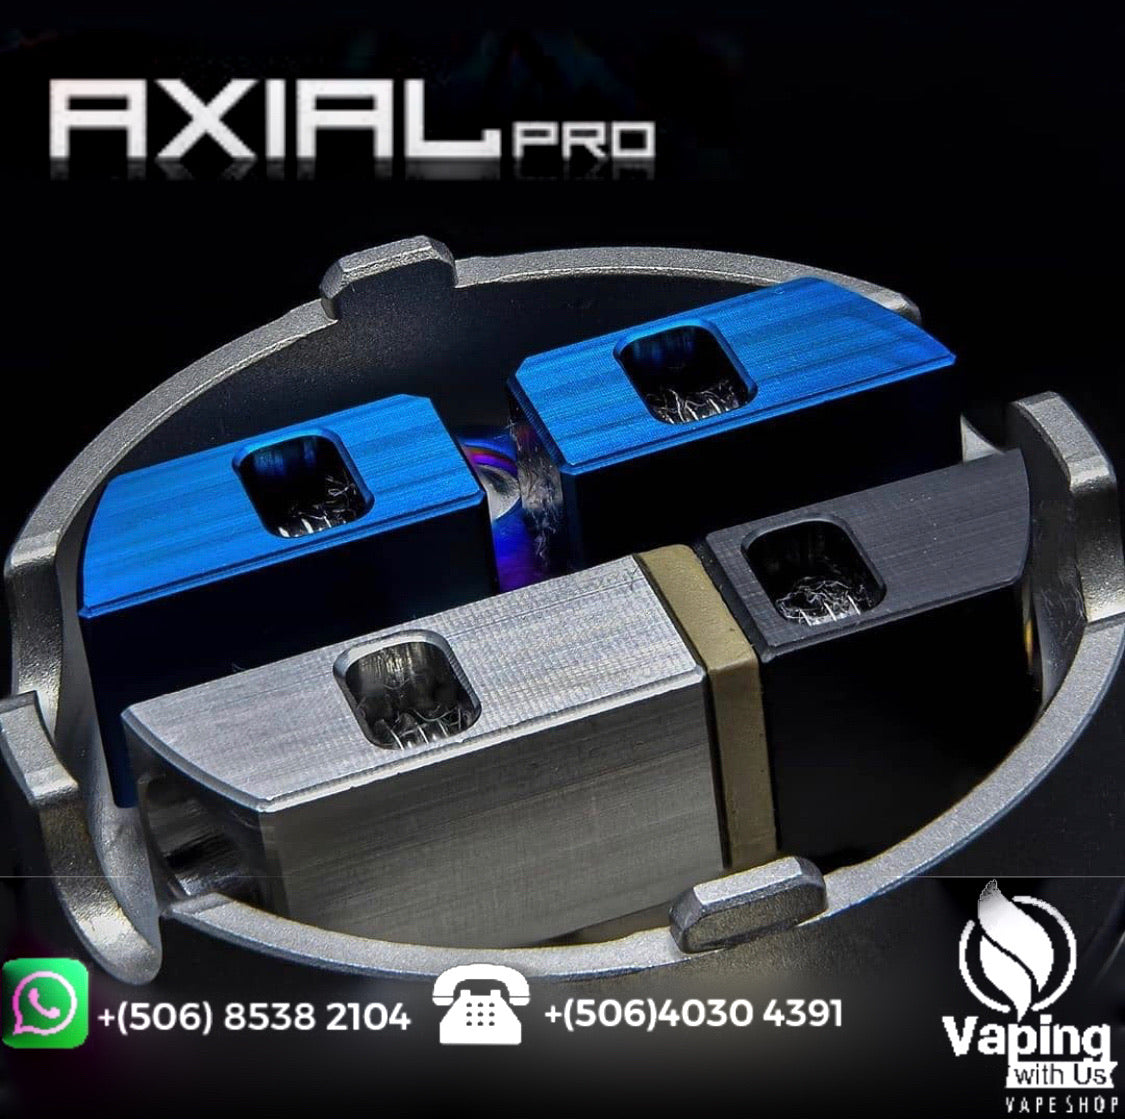 Axial Pro RDA